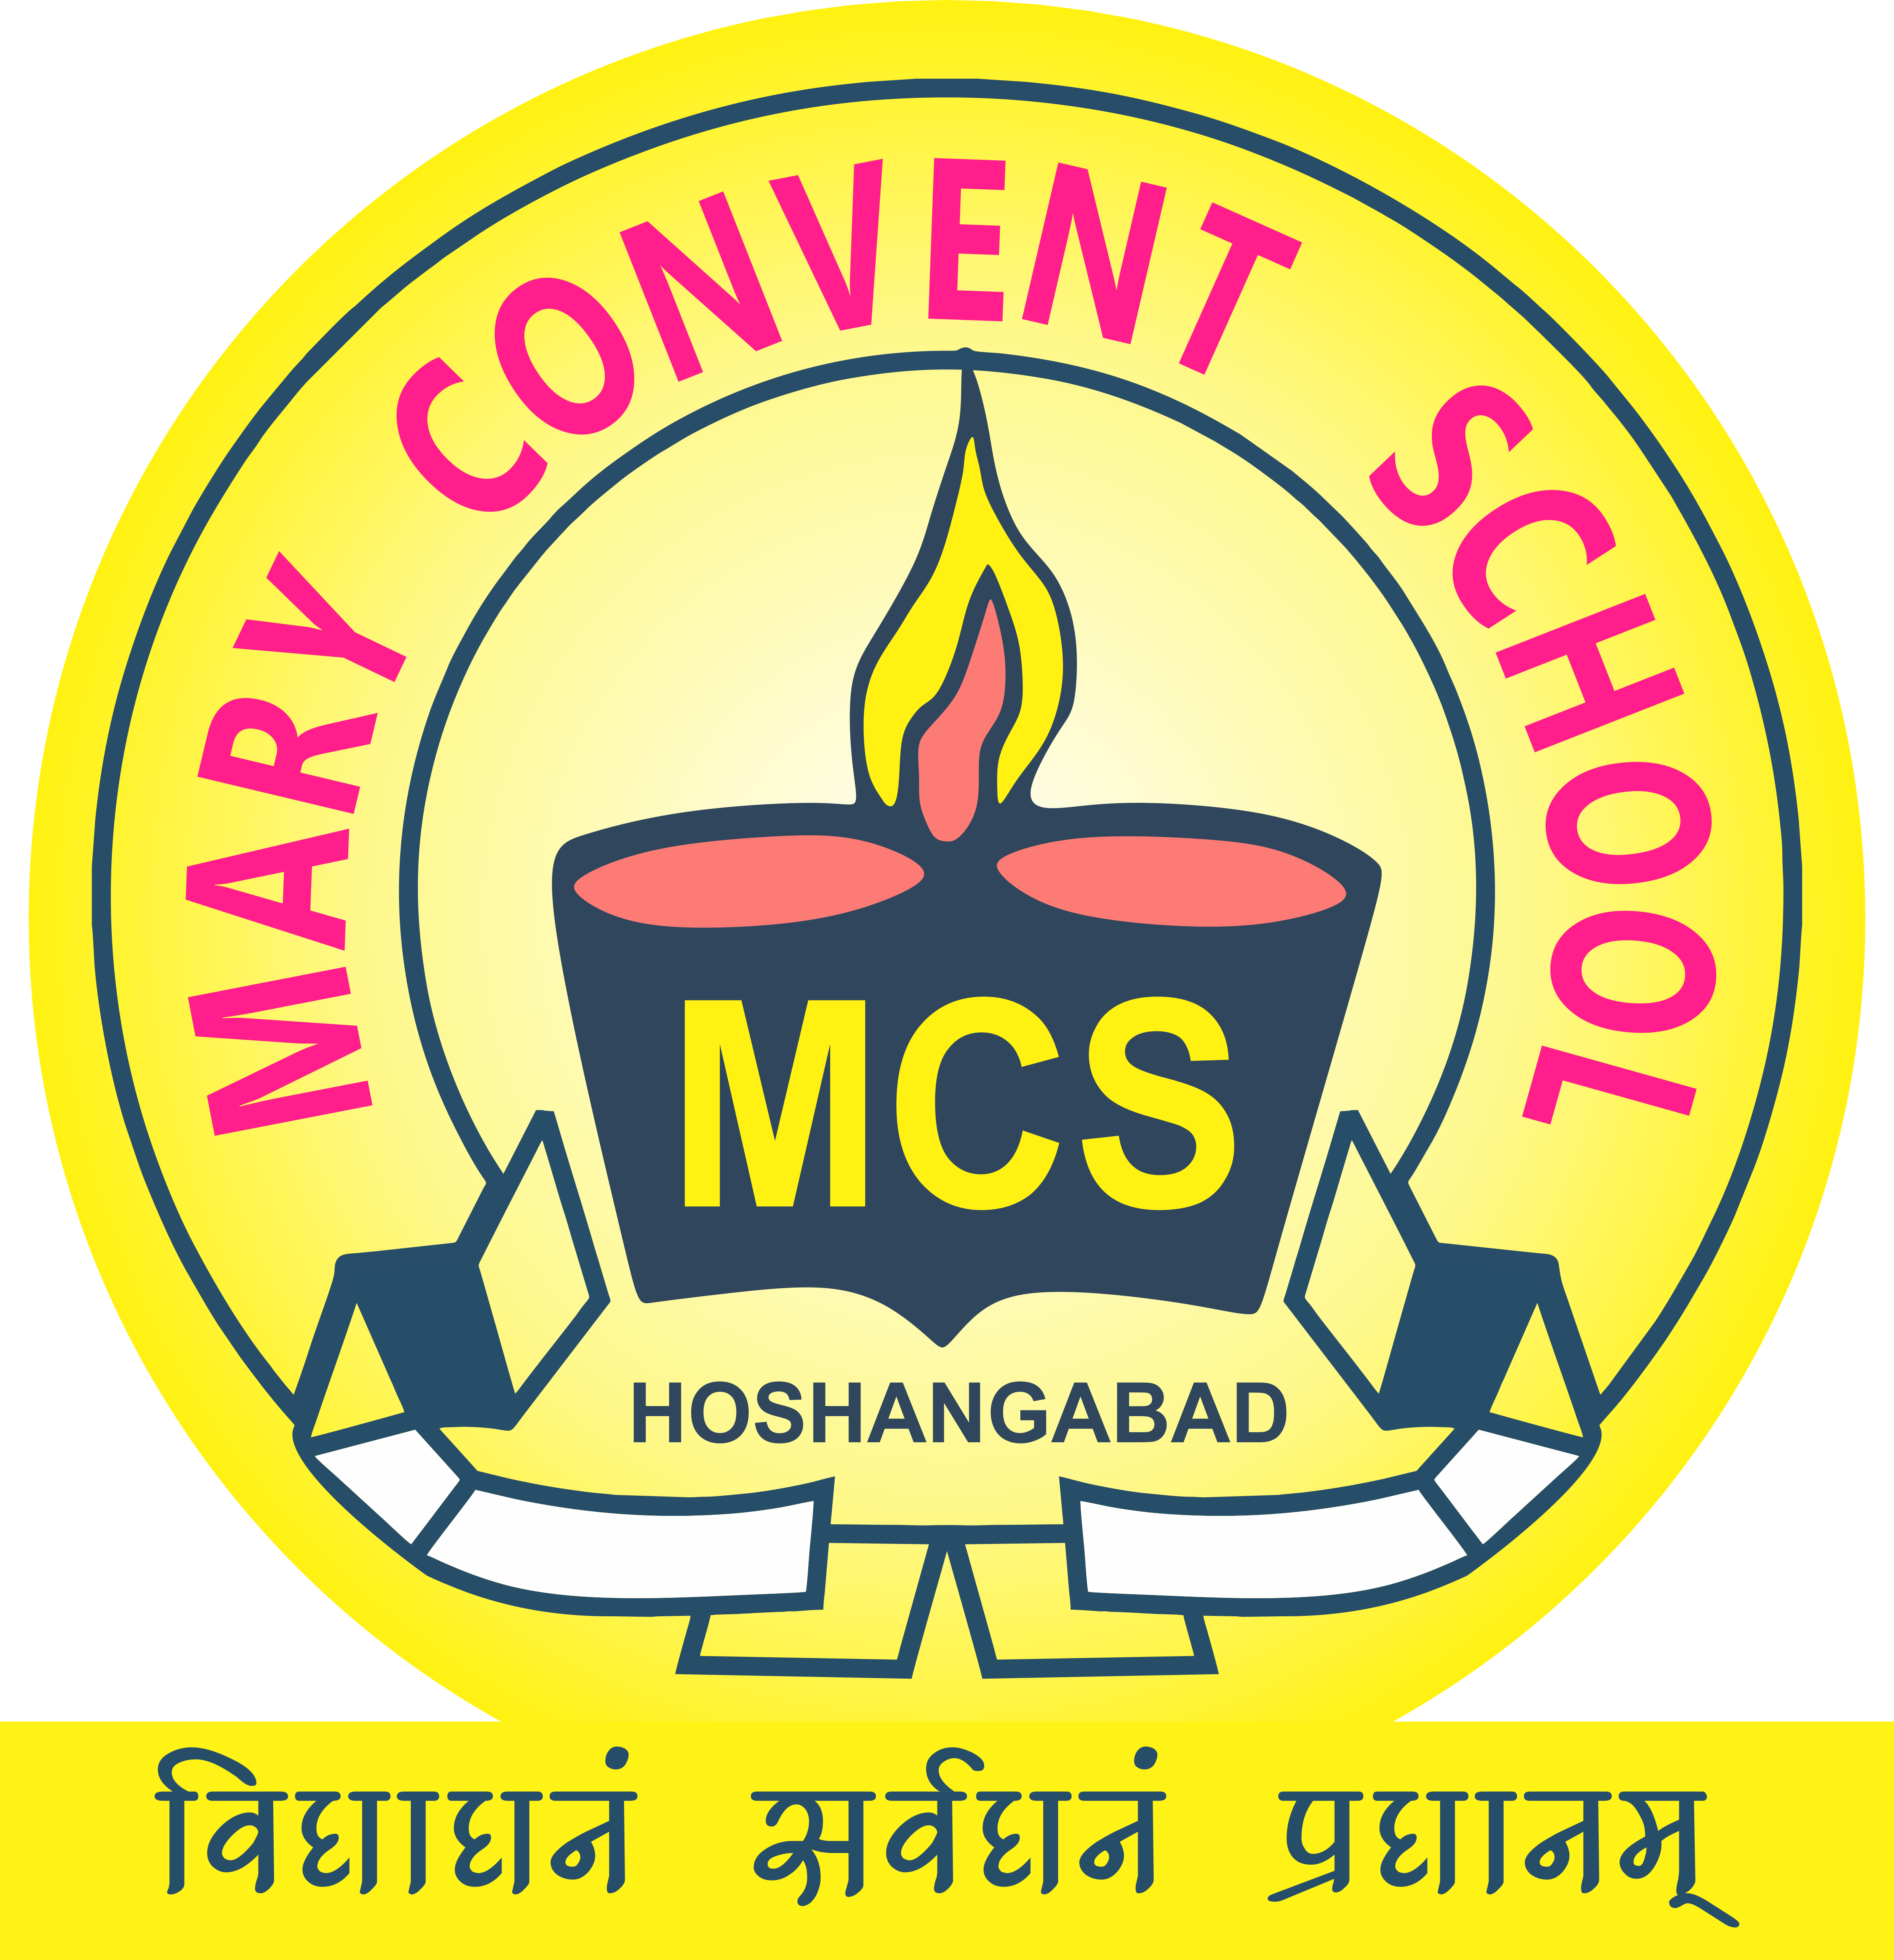 Mary Convent School